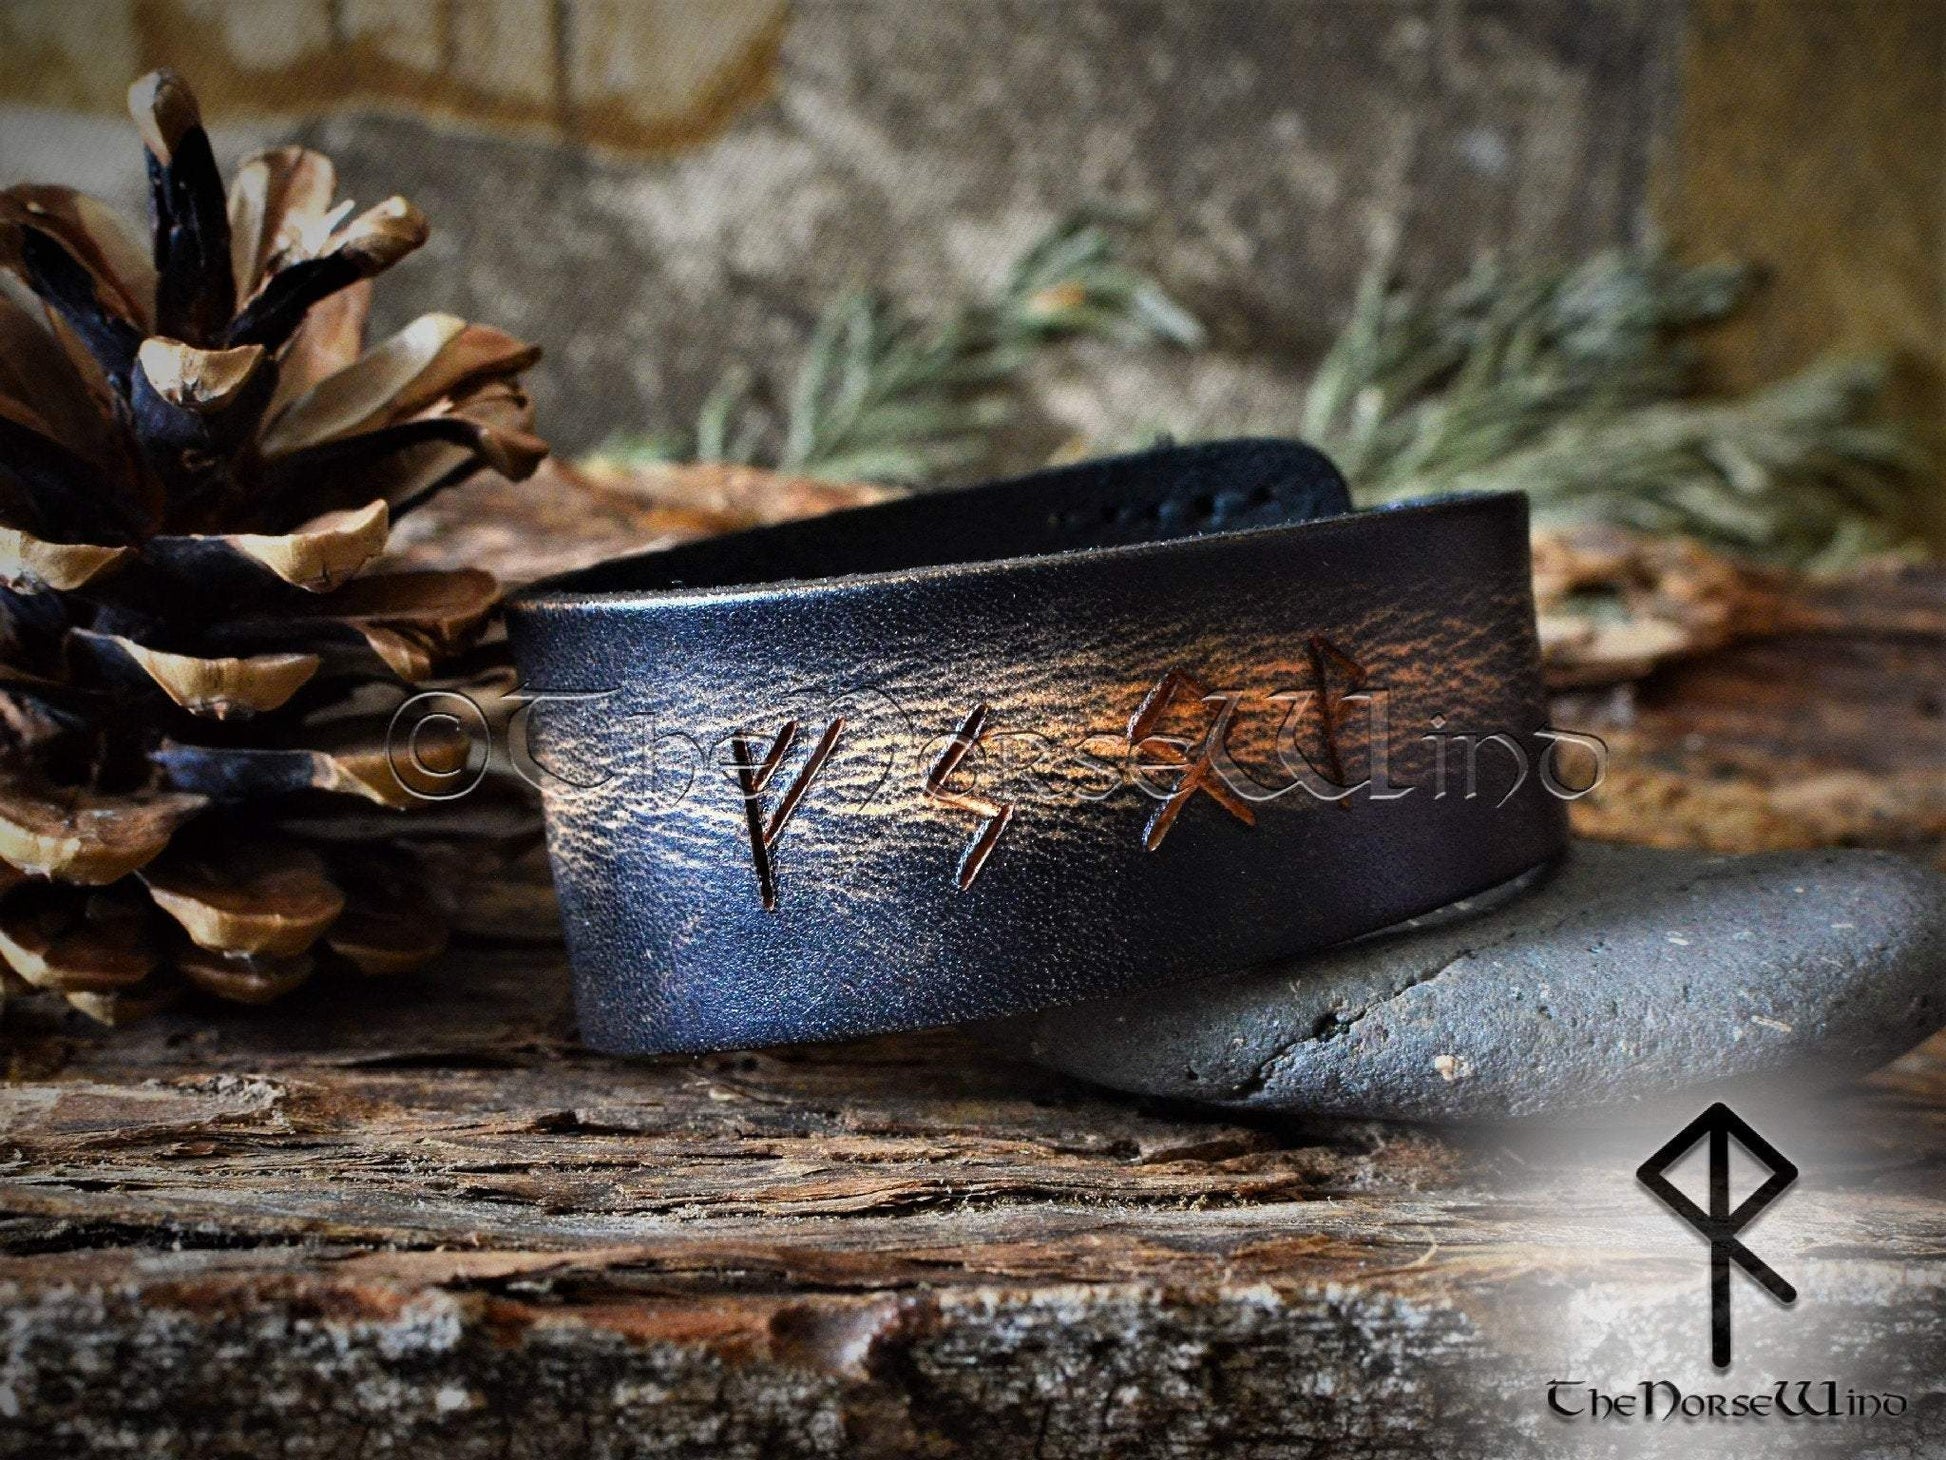 Custom Viking Bracelet - Name in Runes, Black Leather Runes Cuff TheNorseWind